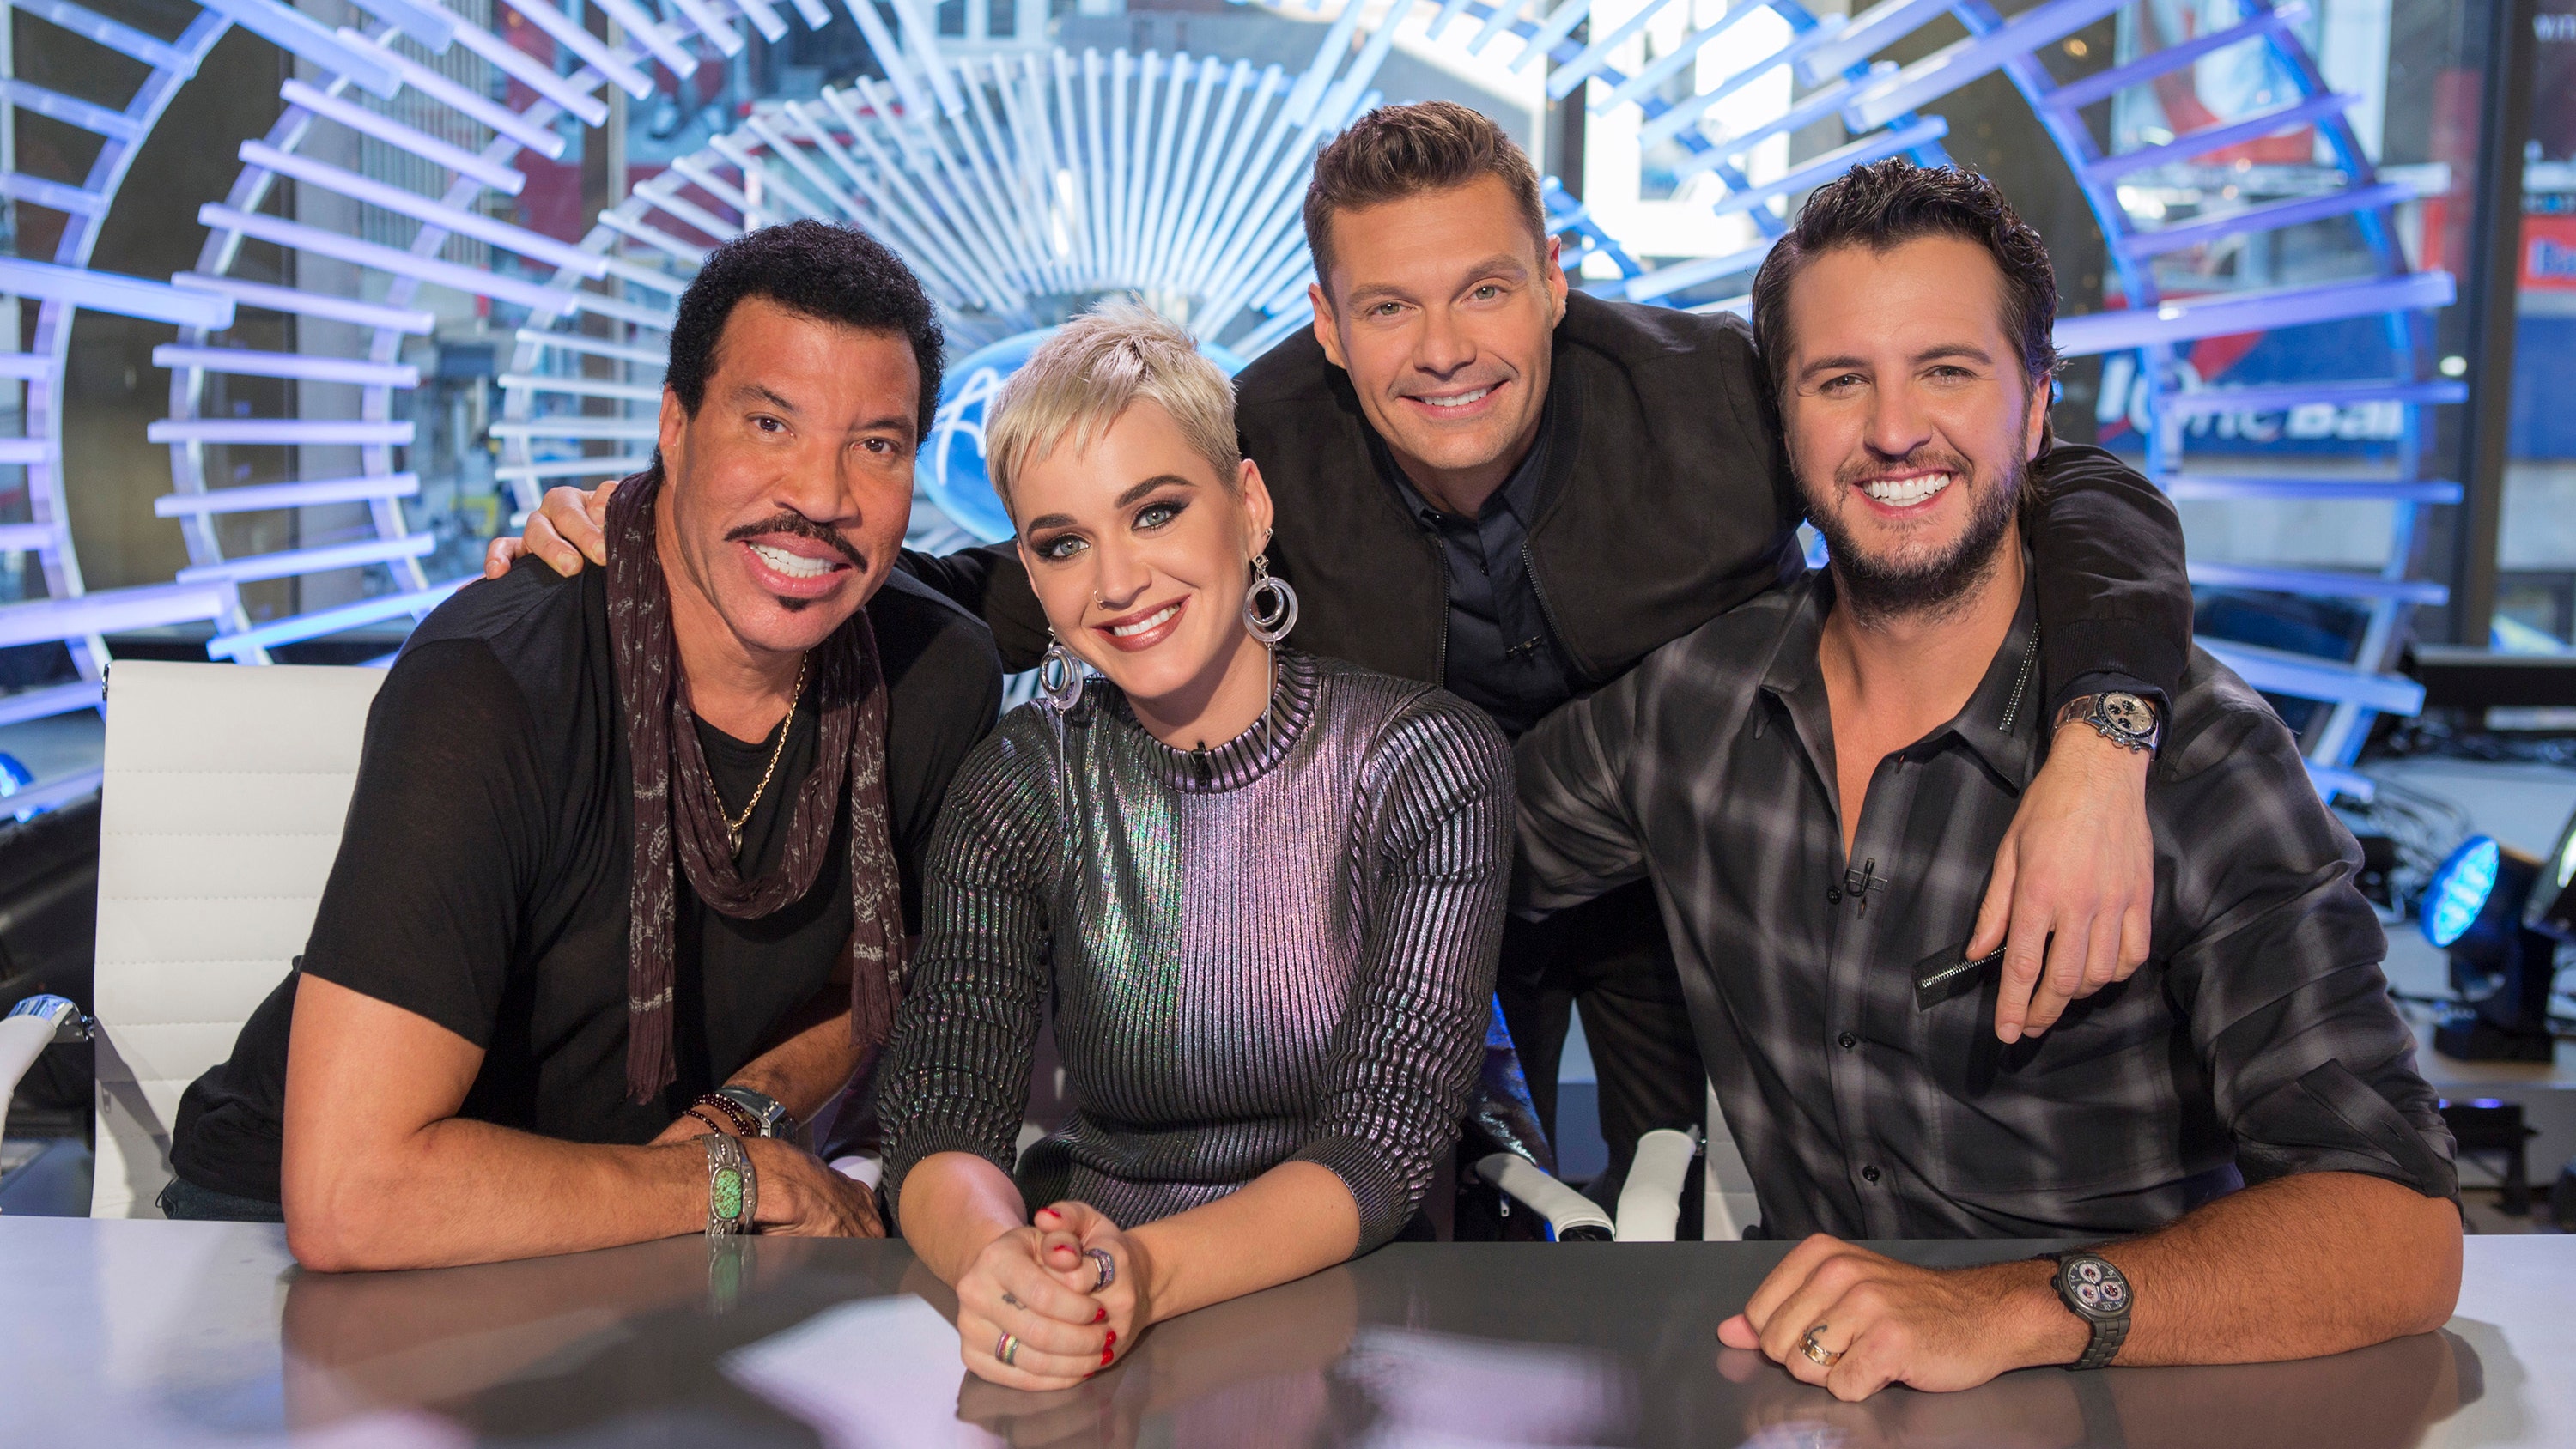 'American Idol' judges Katy Perry, Lionel Richie give update on Luke Bryan after coronavirus announcement - Fox News